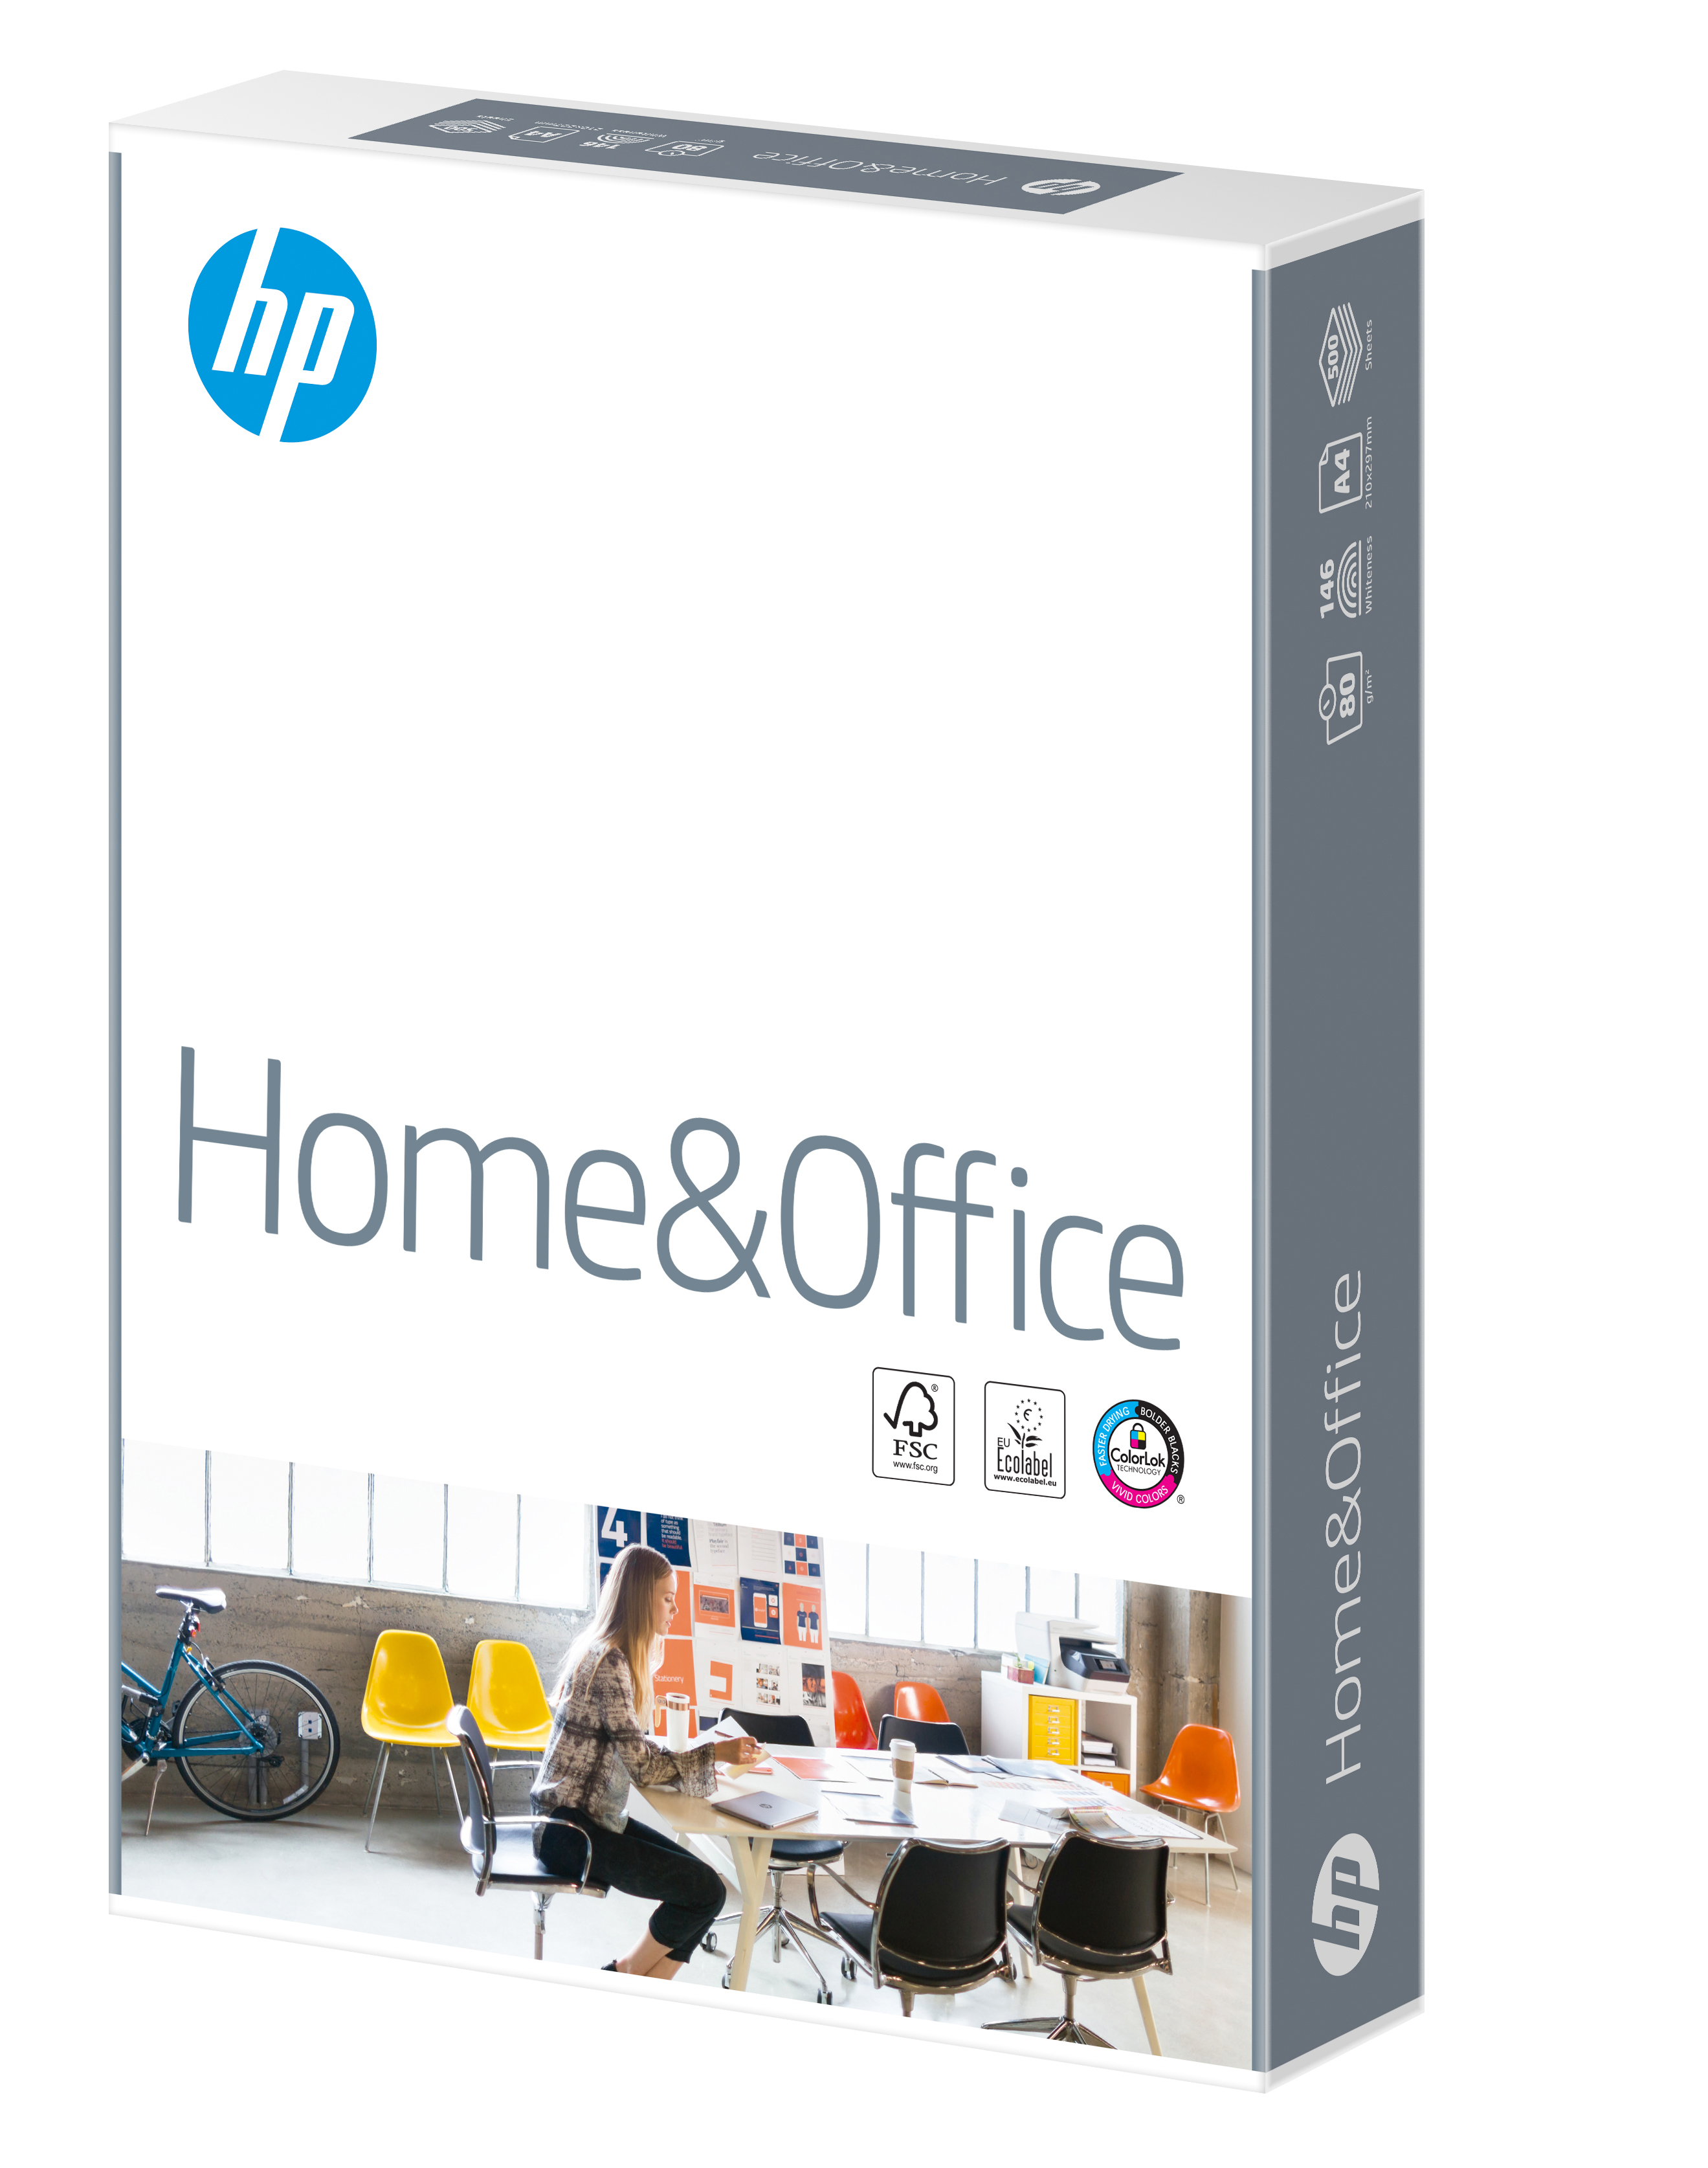 Carta per fotocopie HP Home&Office A3, 80gr - Confezioni da 5 risme